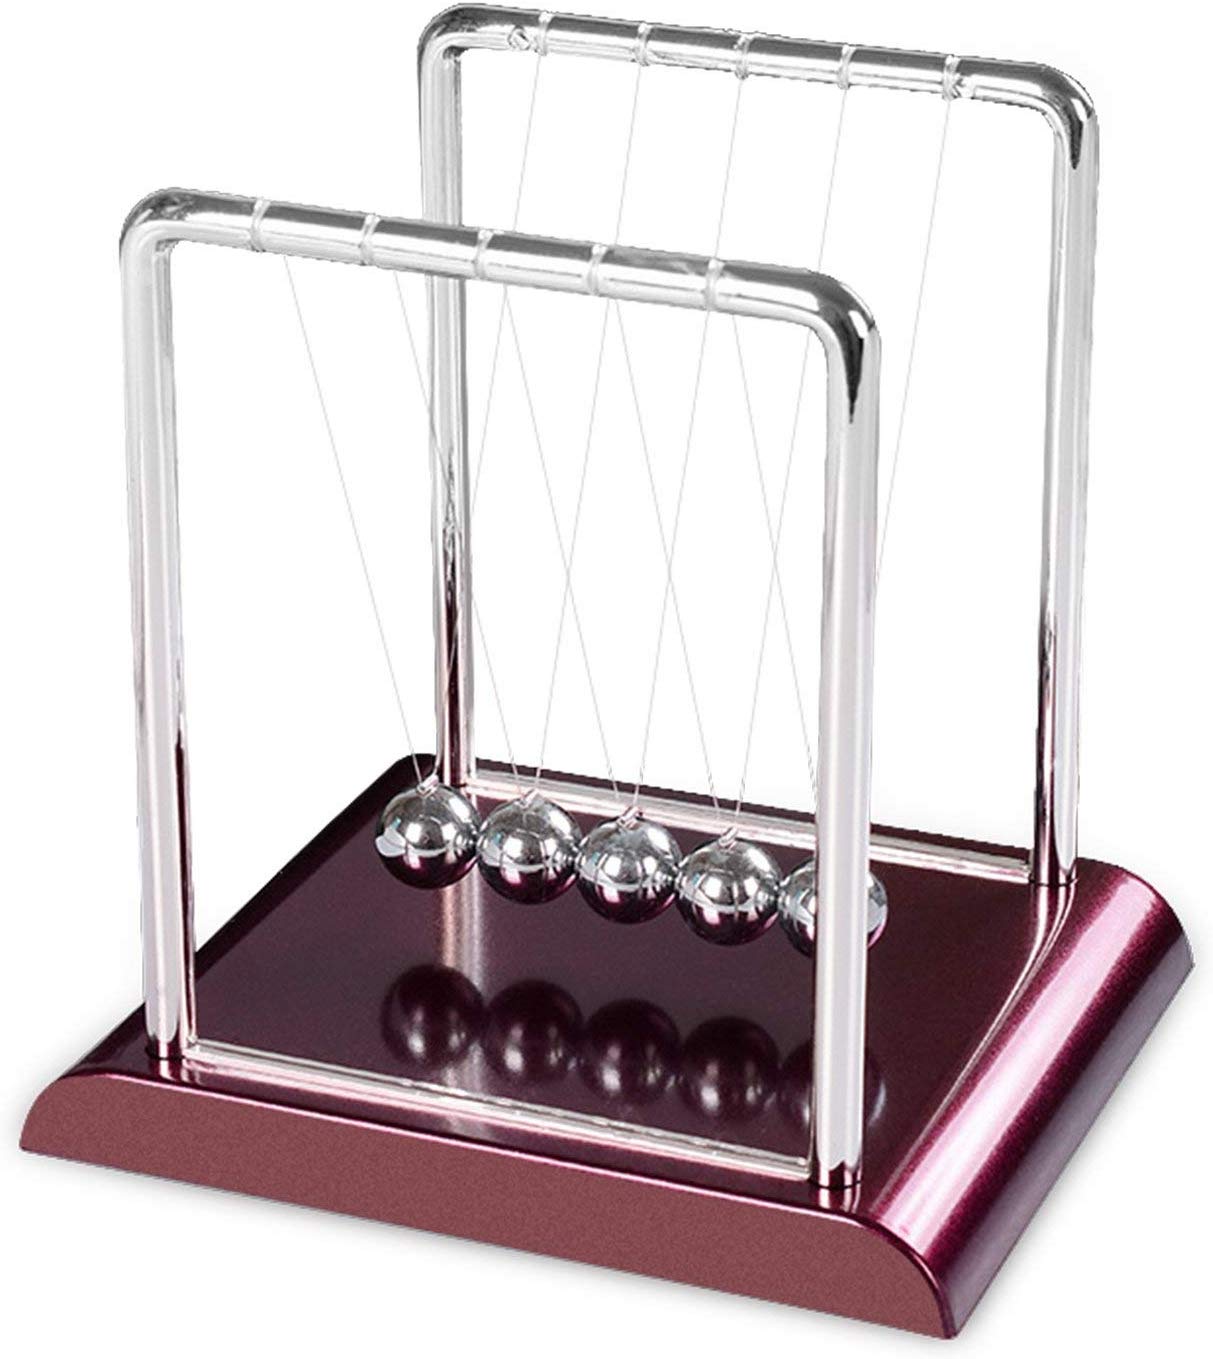 Duokon Steel Balance Swinging Magnetic Ball Cradle Physics Science Pendulum Desk Fun Toy Gift